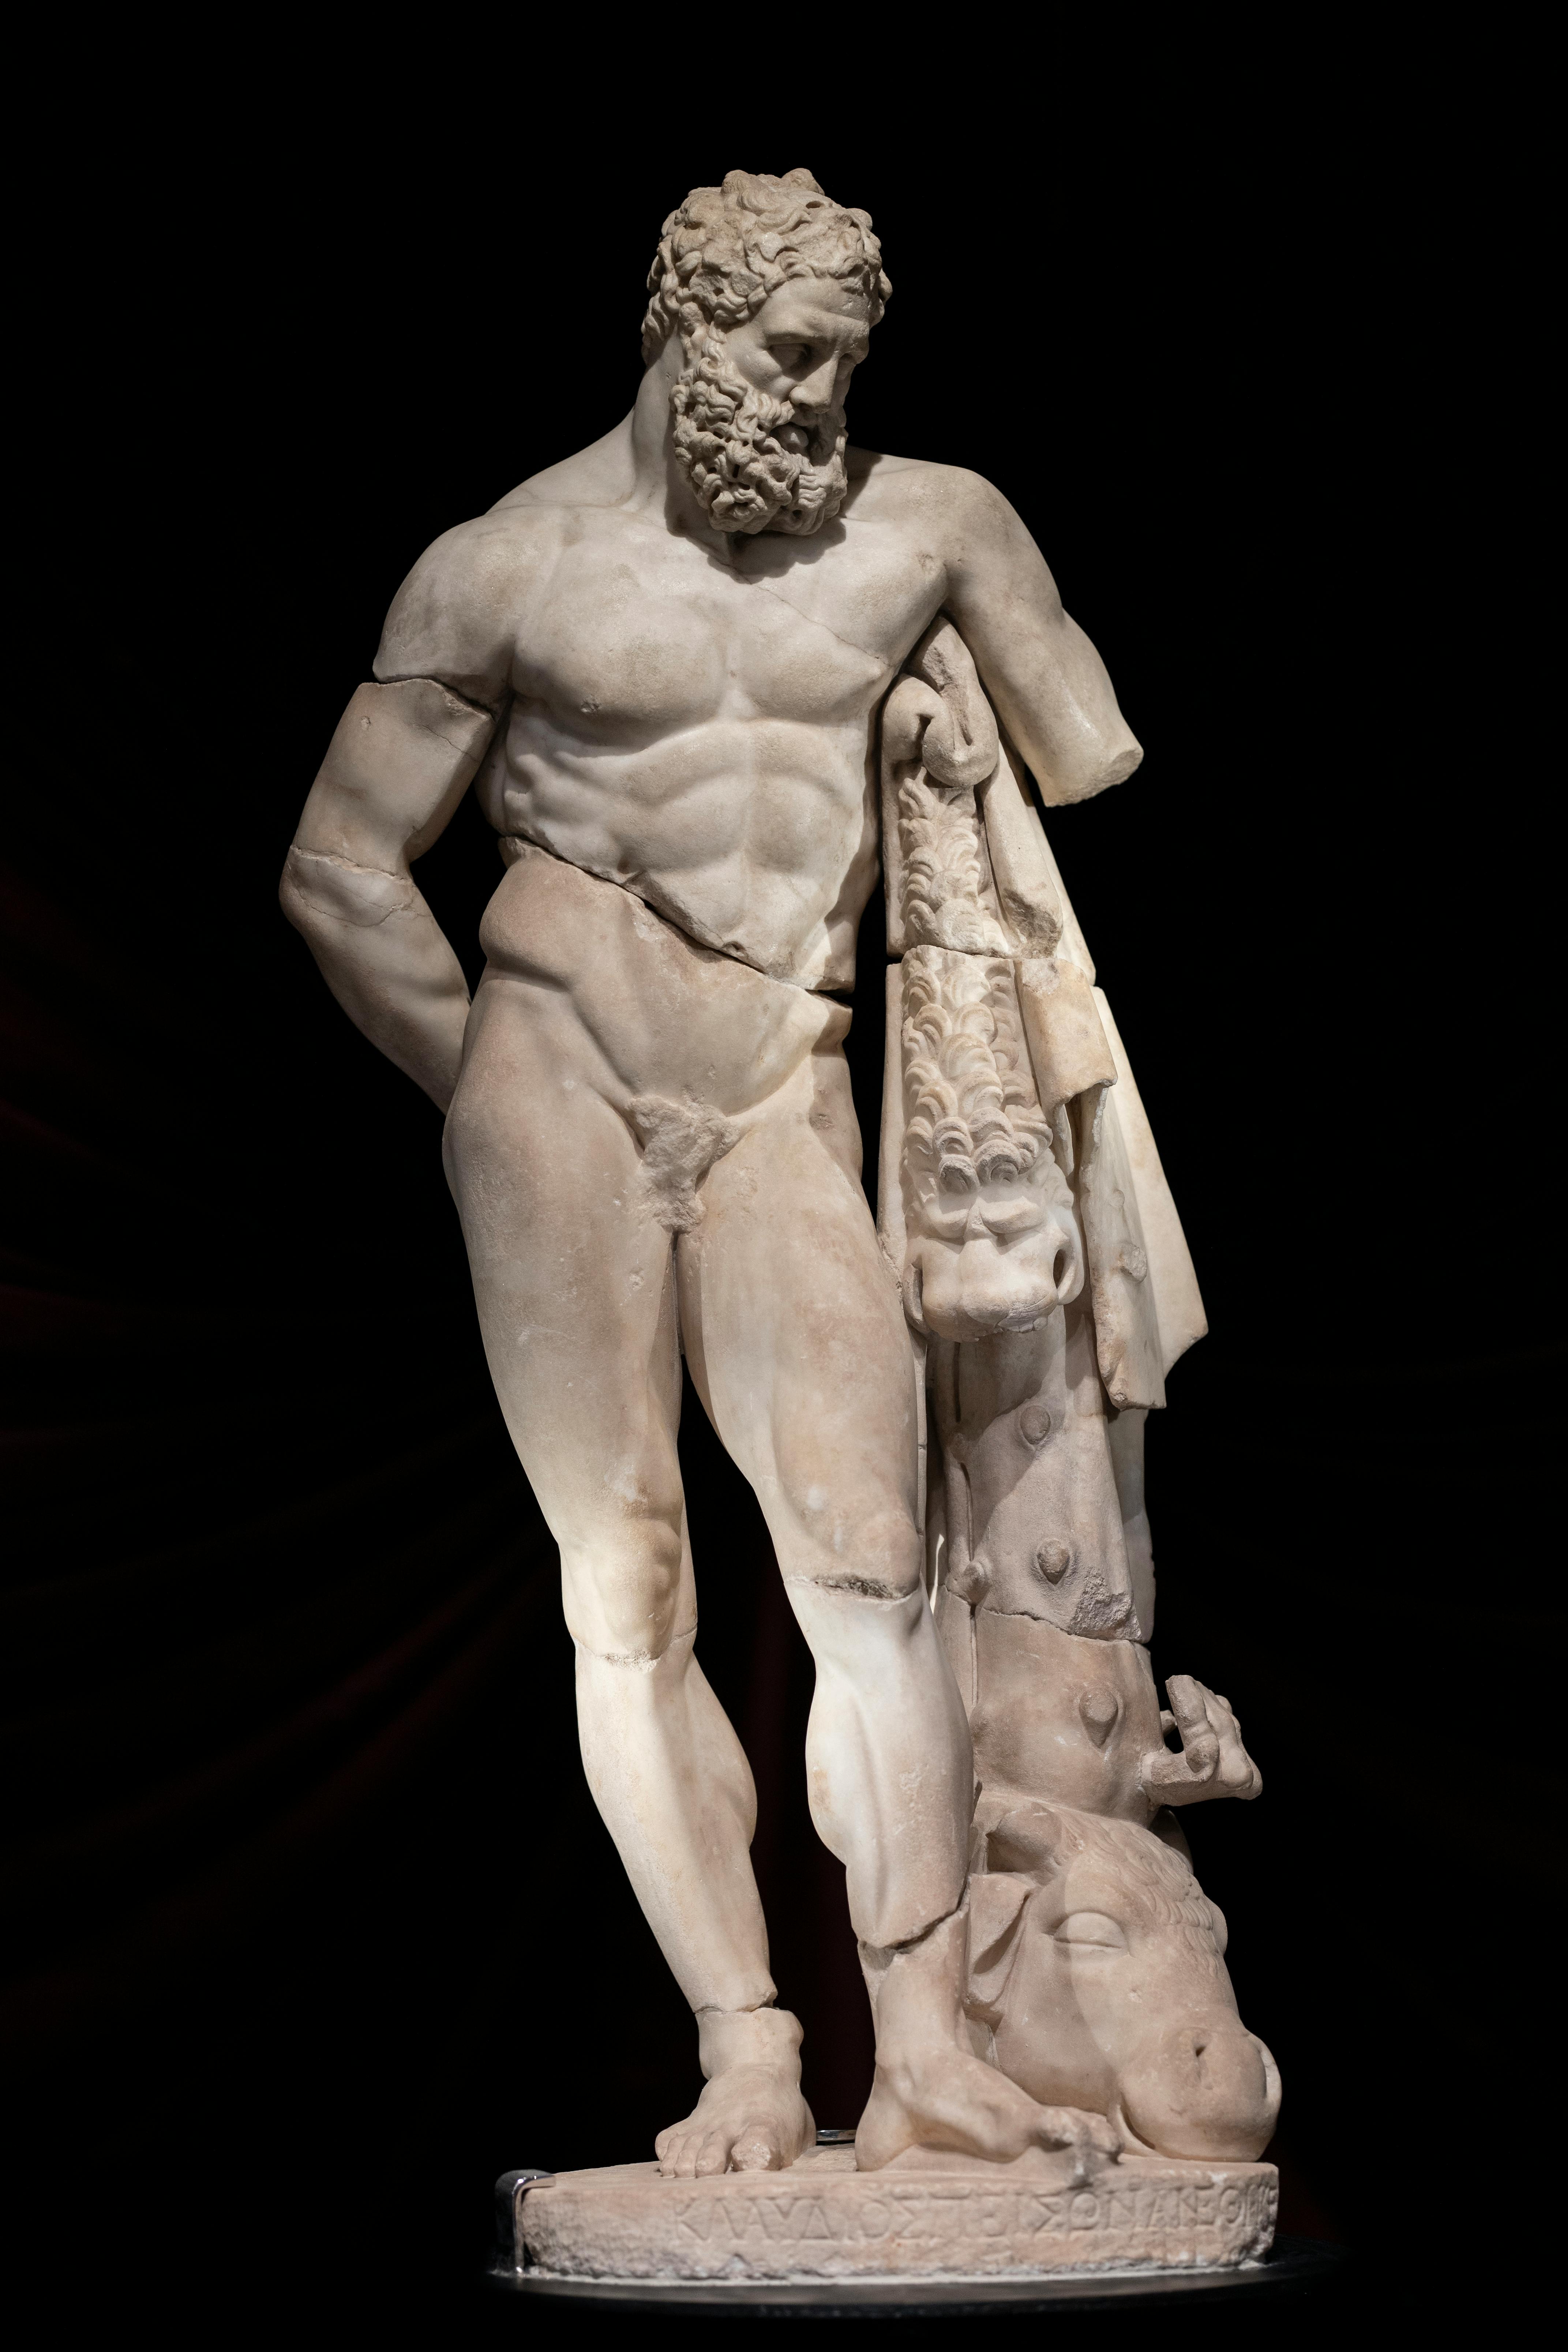 Wallpaper Mythology Darkness Ipotane Aries Greek Creative Arts  Background  Download Free Image